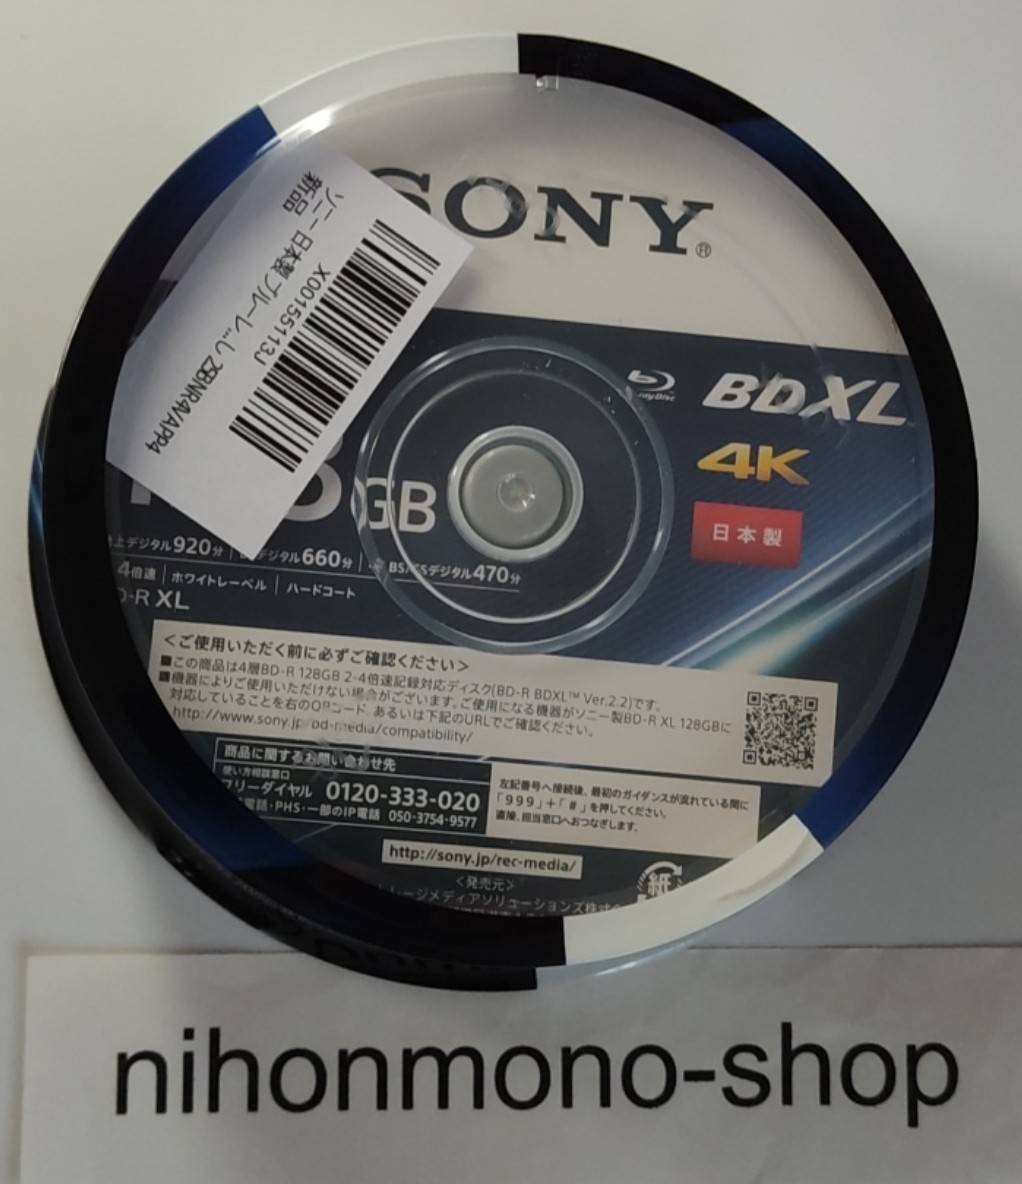 SONY BD-R for Video 128GB 1-4x Printable Spindle Blu-ray Disc 25pcs 25BNR4VAPP4